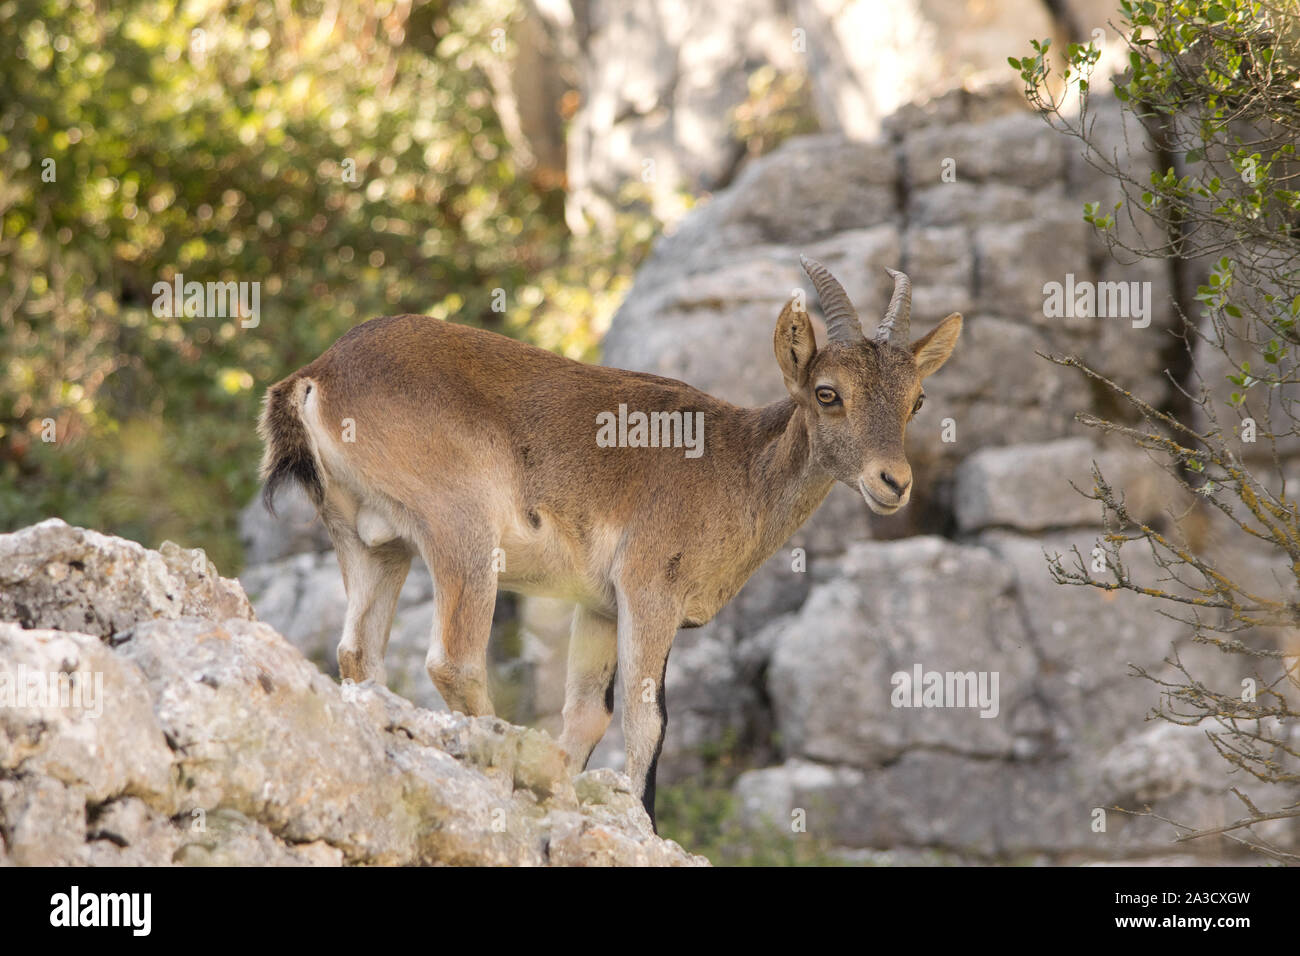 Iberian ibex in the wilderness. Spain. Stock Photo